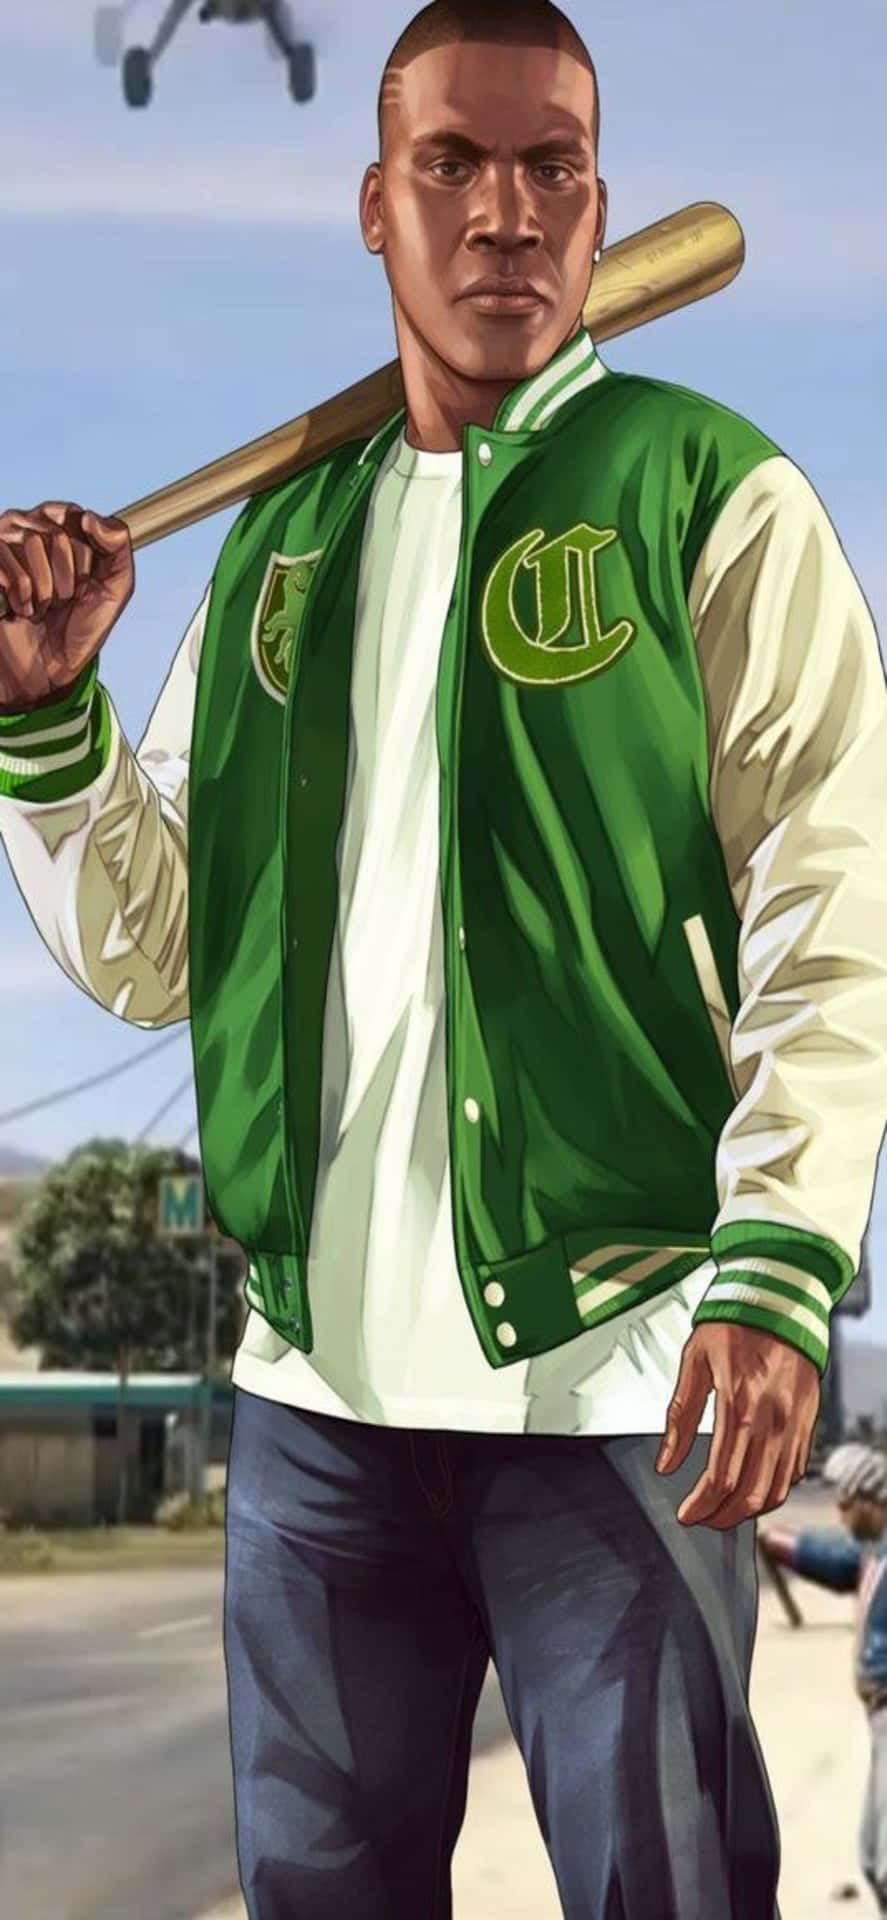 Iphone X Grand Theft Auto V Background&Varsity Jacket